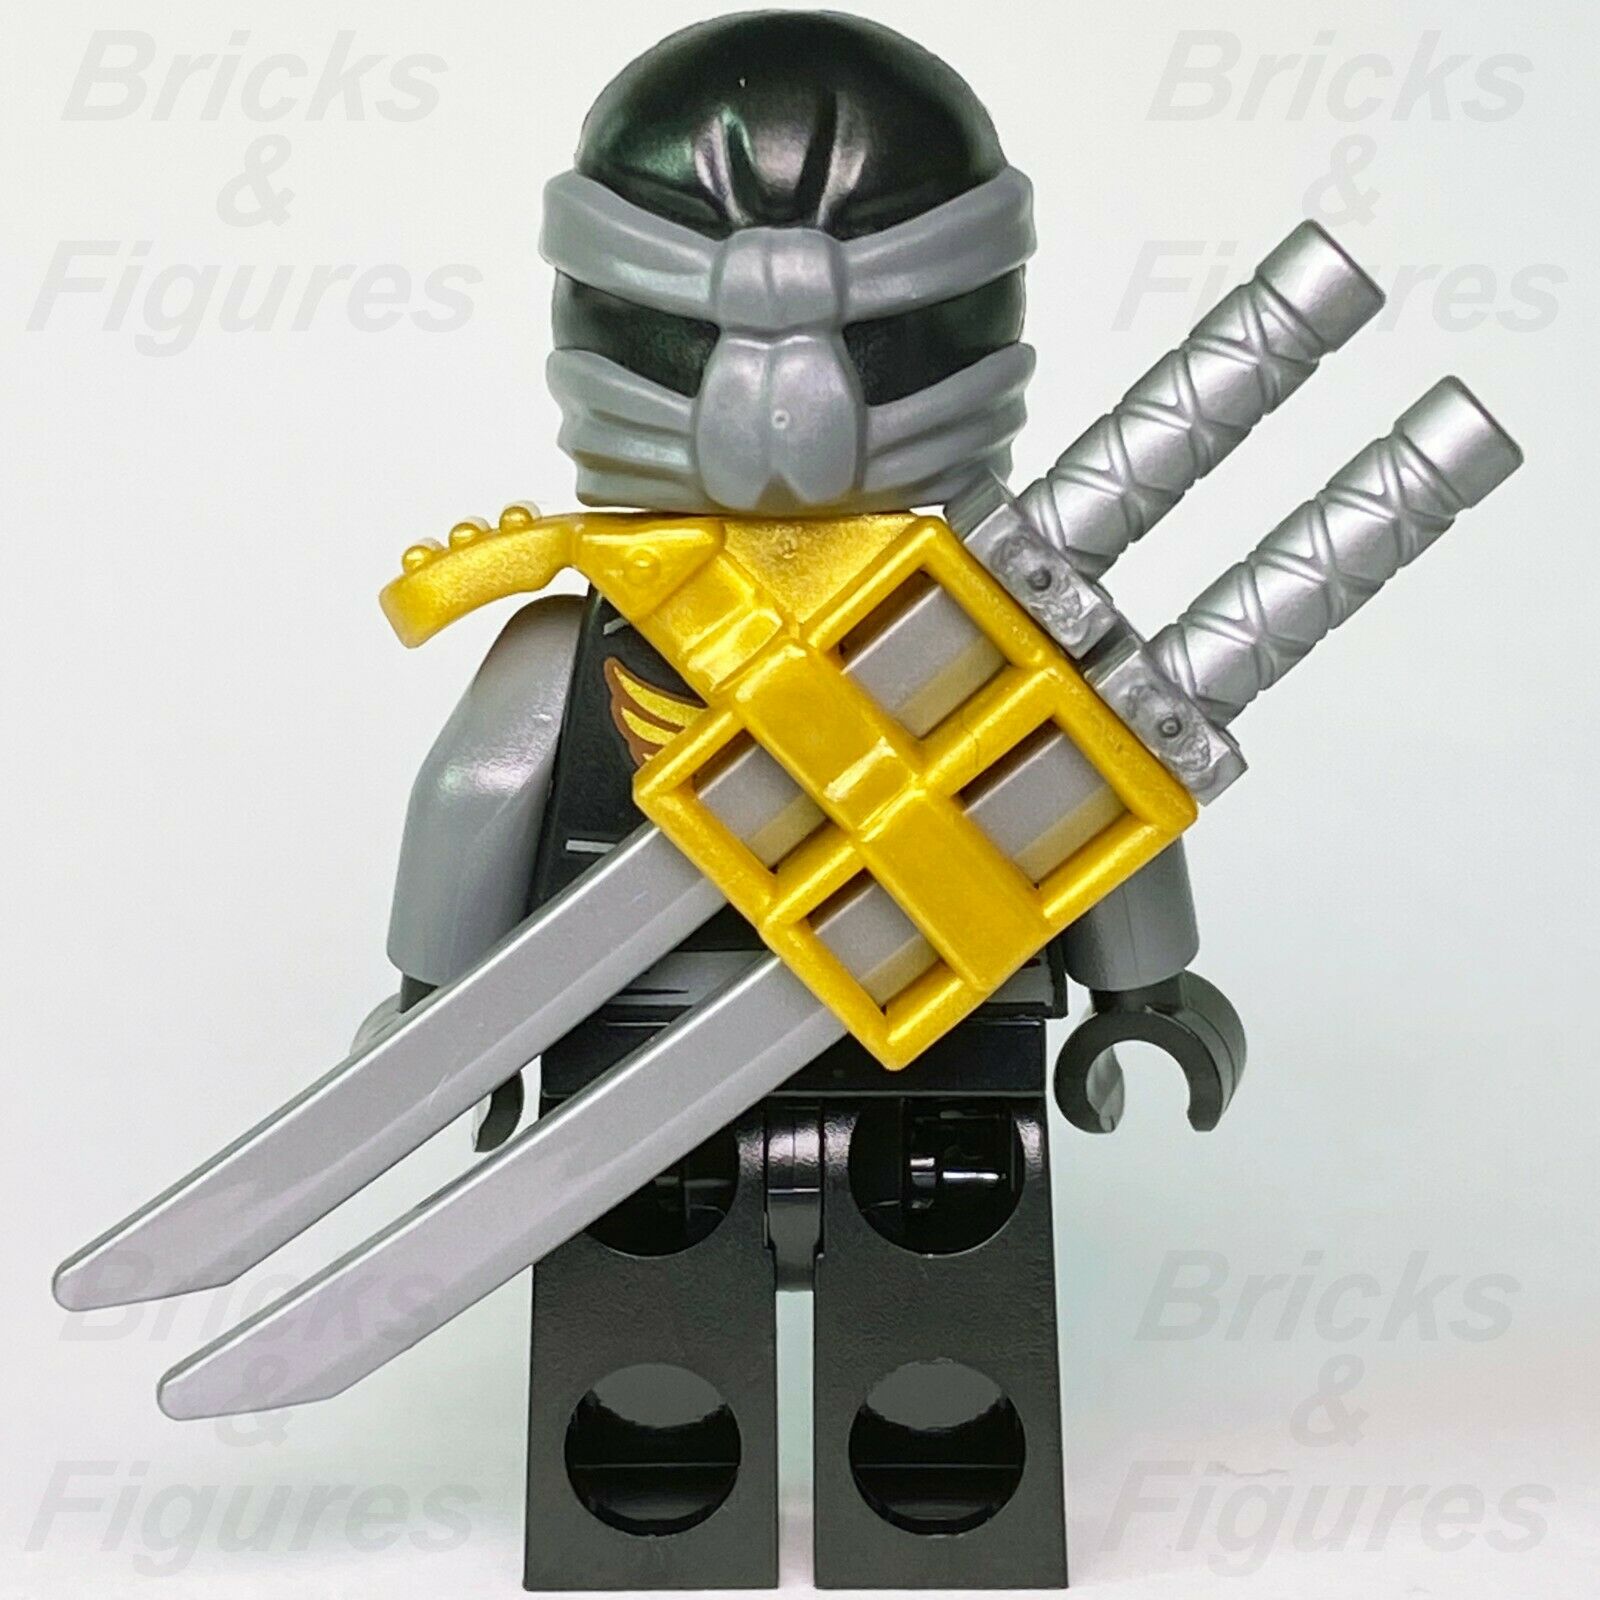 New Ninjago LEGO Ninja Cole Ghost Skybound Master of Earth Minifigure 70604 - Bricks & Figures